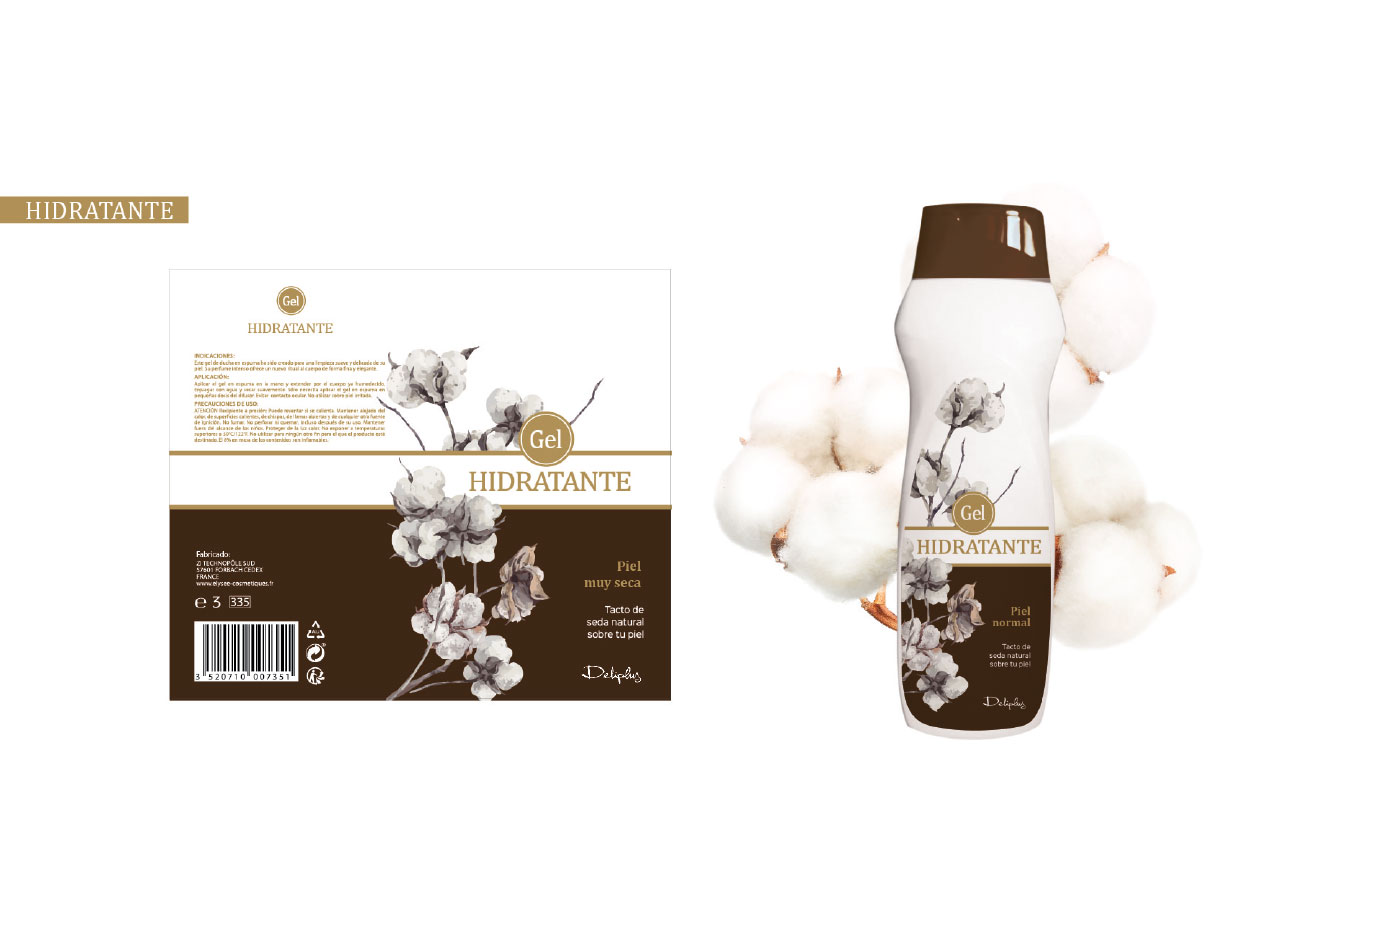 Gel de ducha romantic style packaging mercadona hidratante